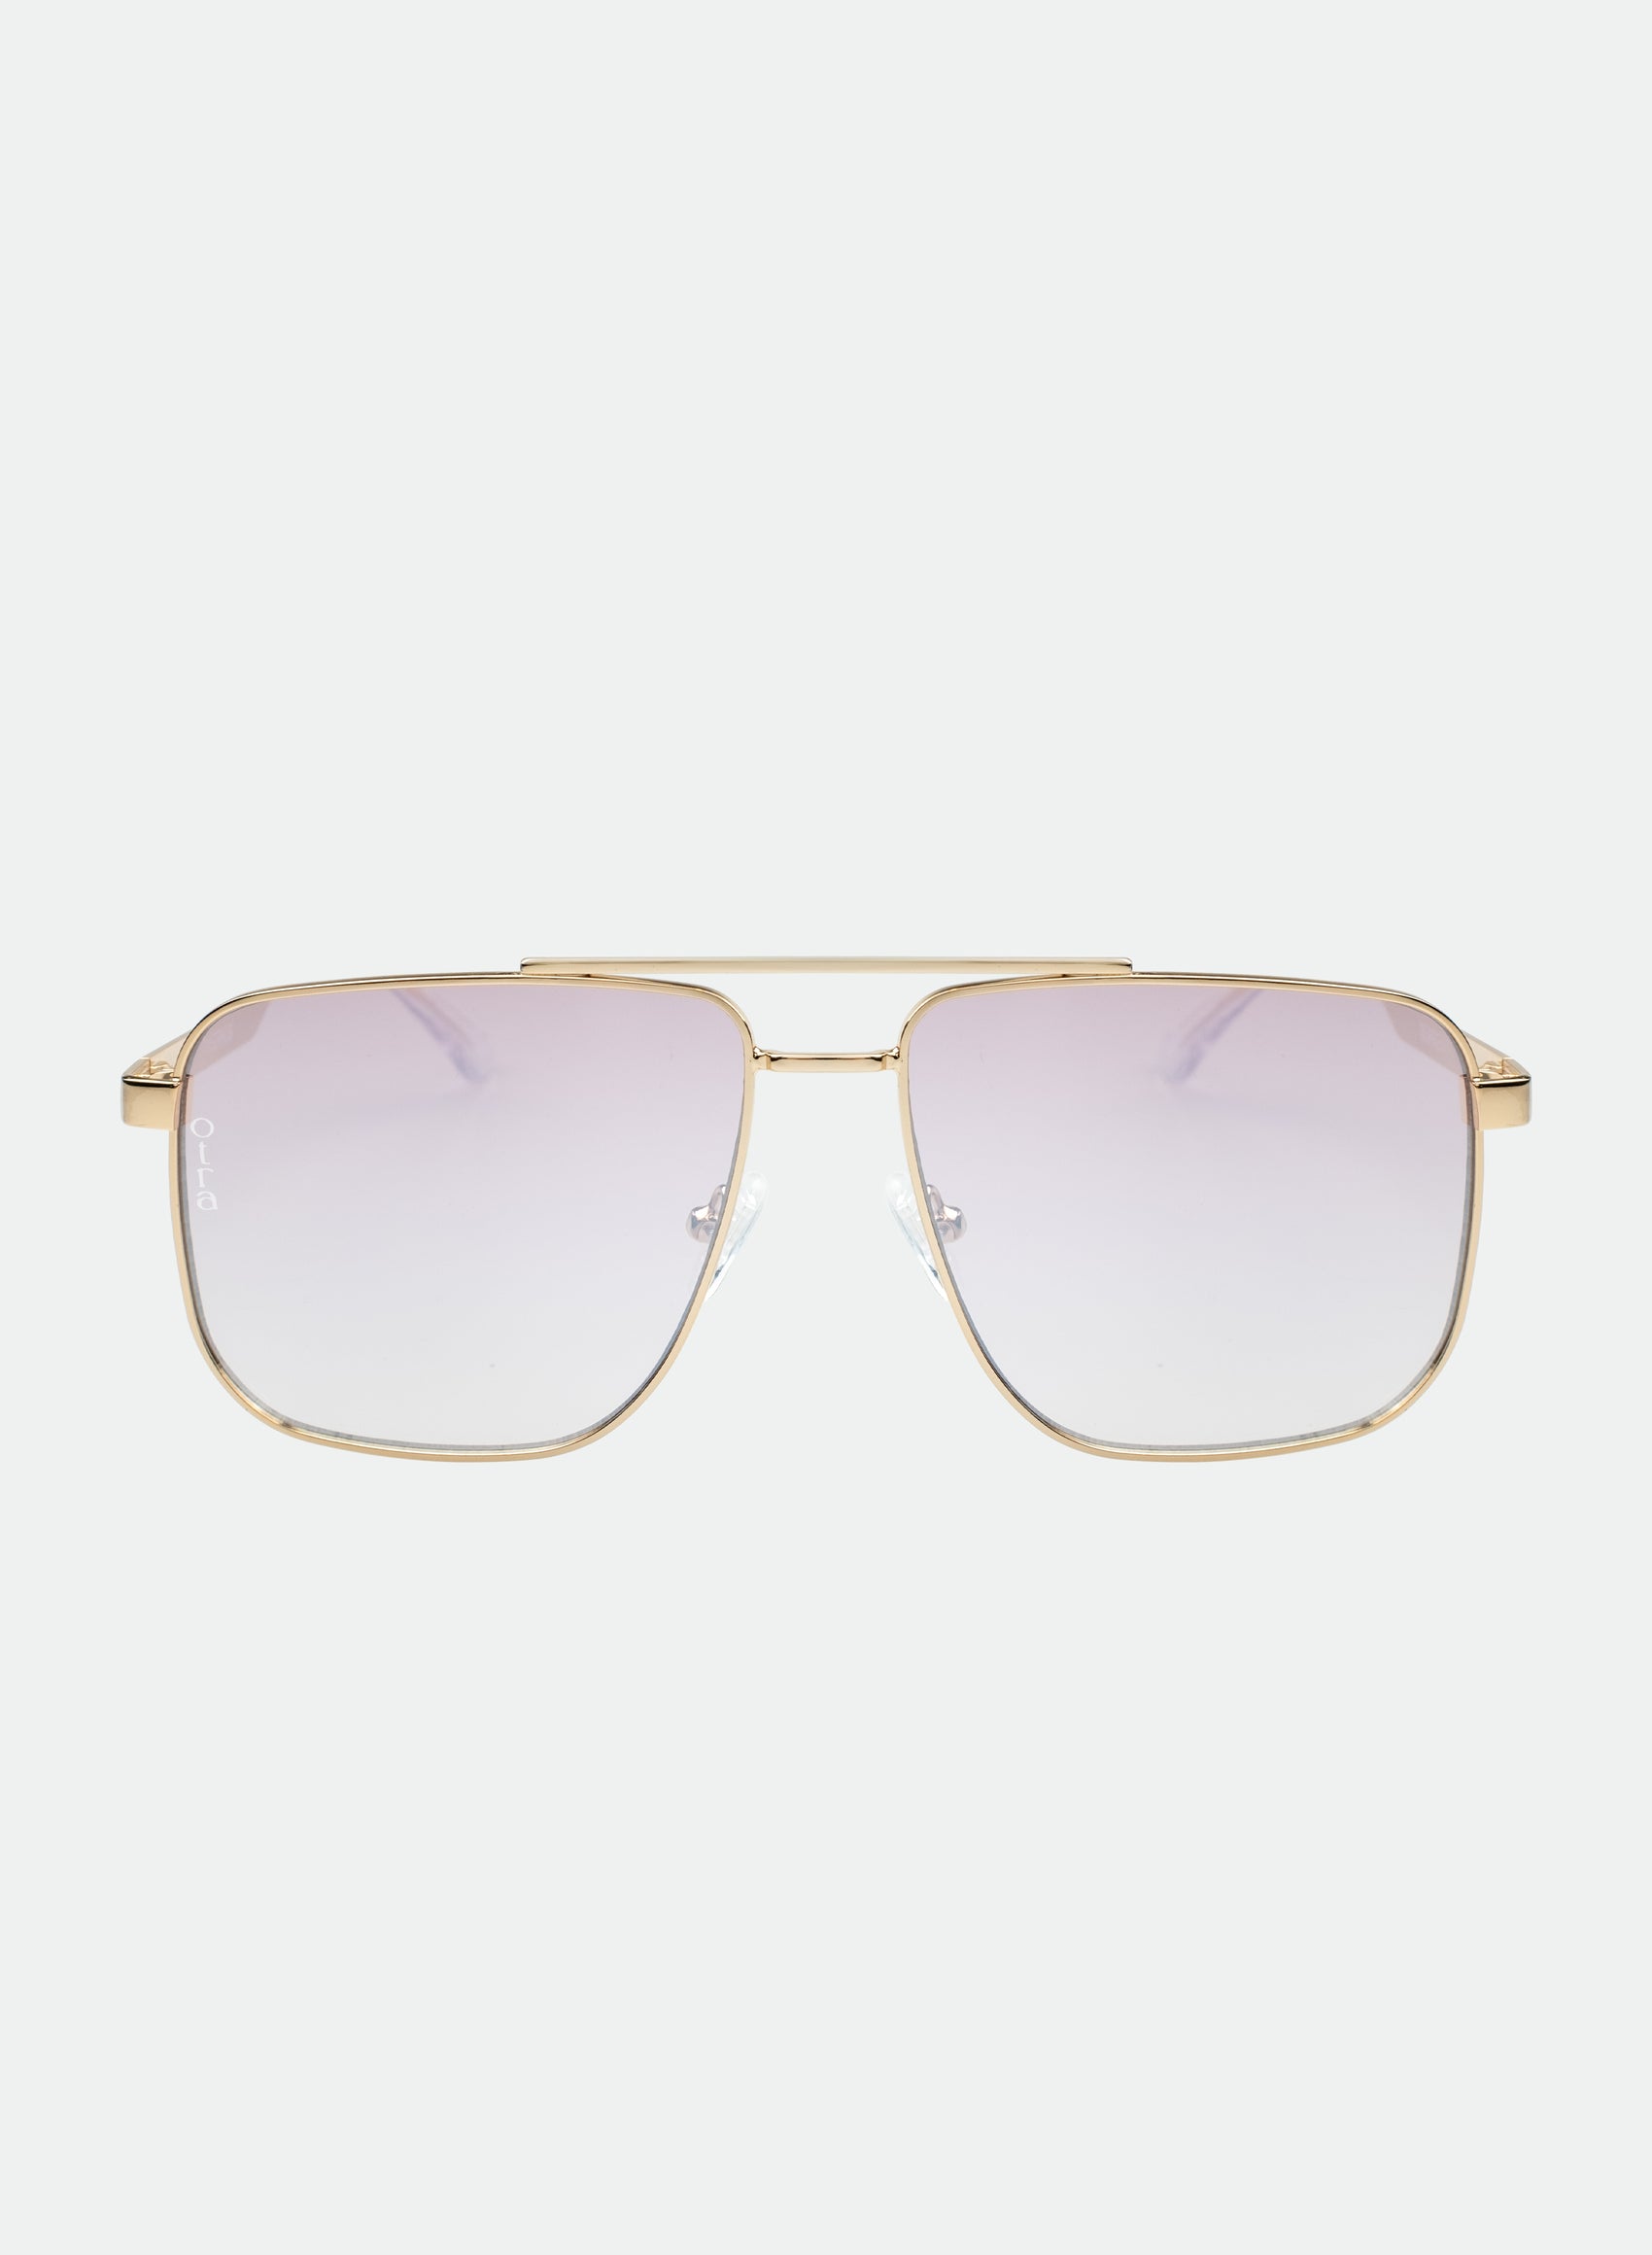 Sorrento gold pink sunglasses 